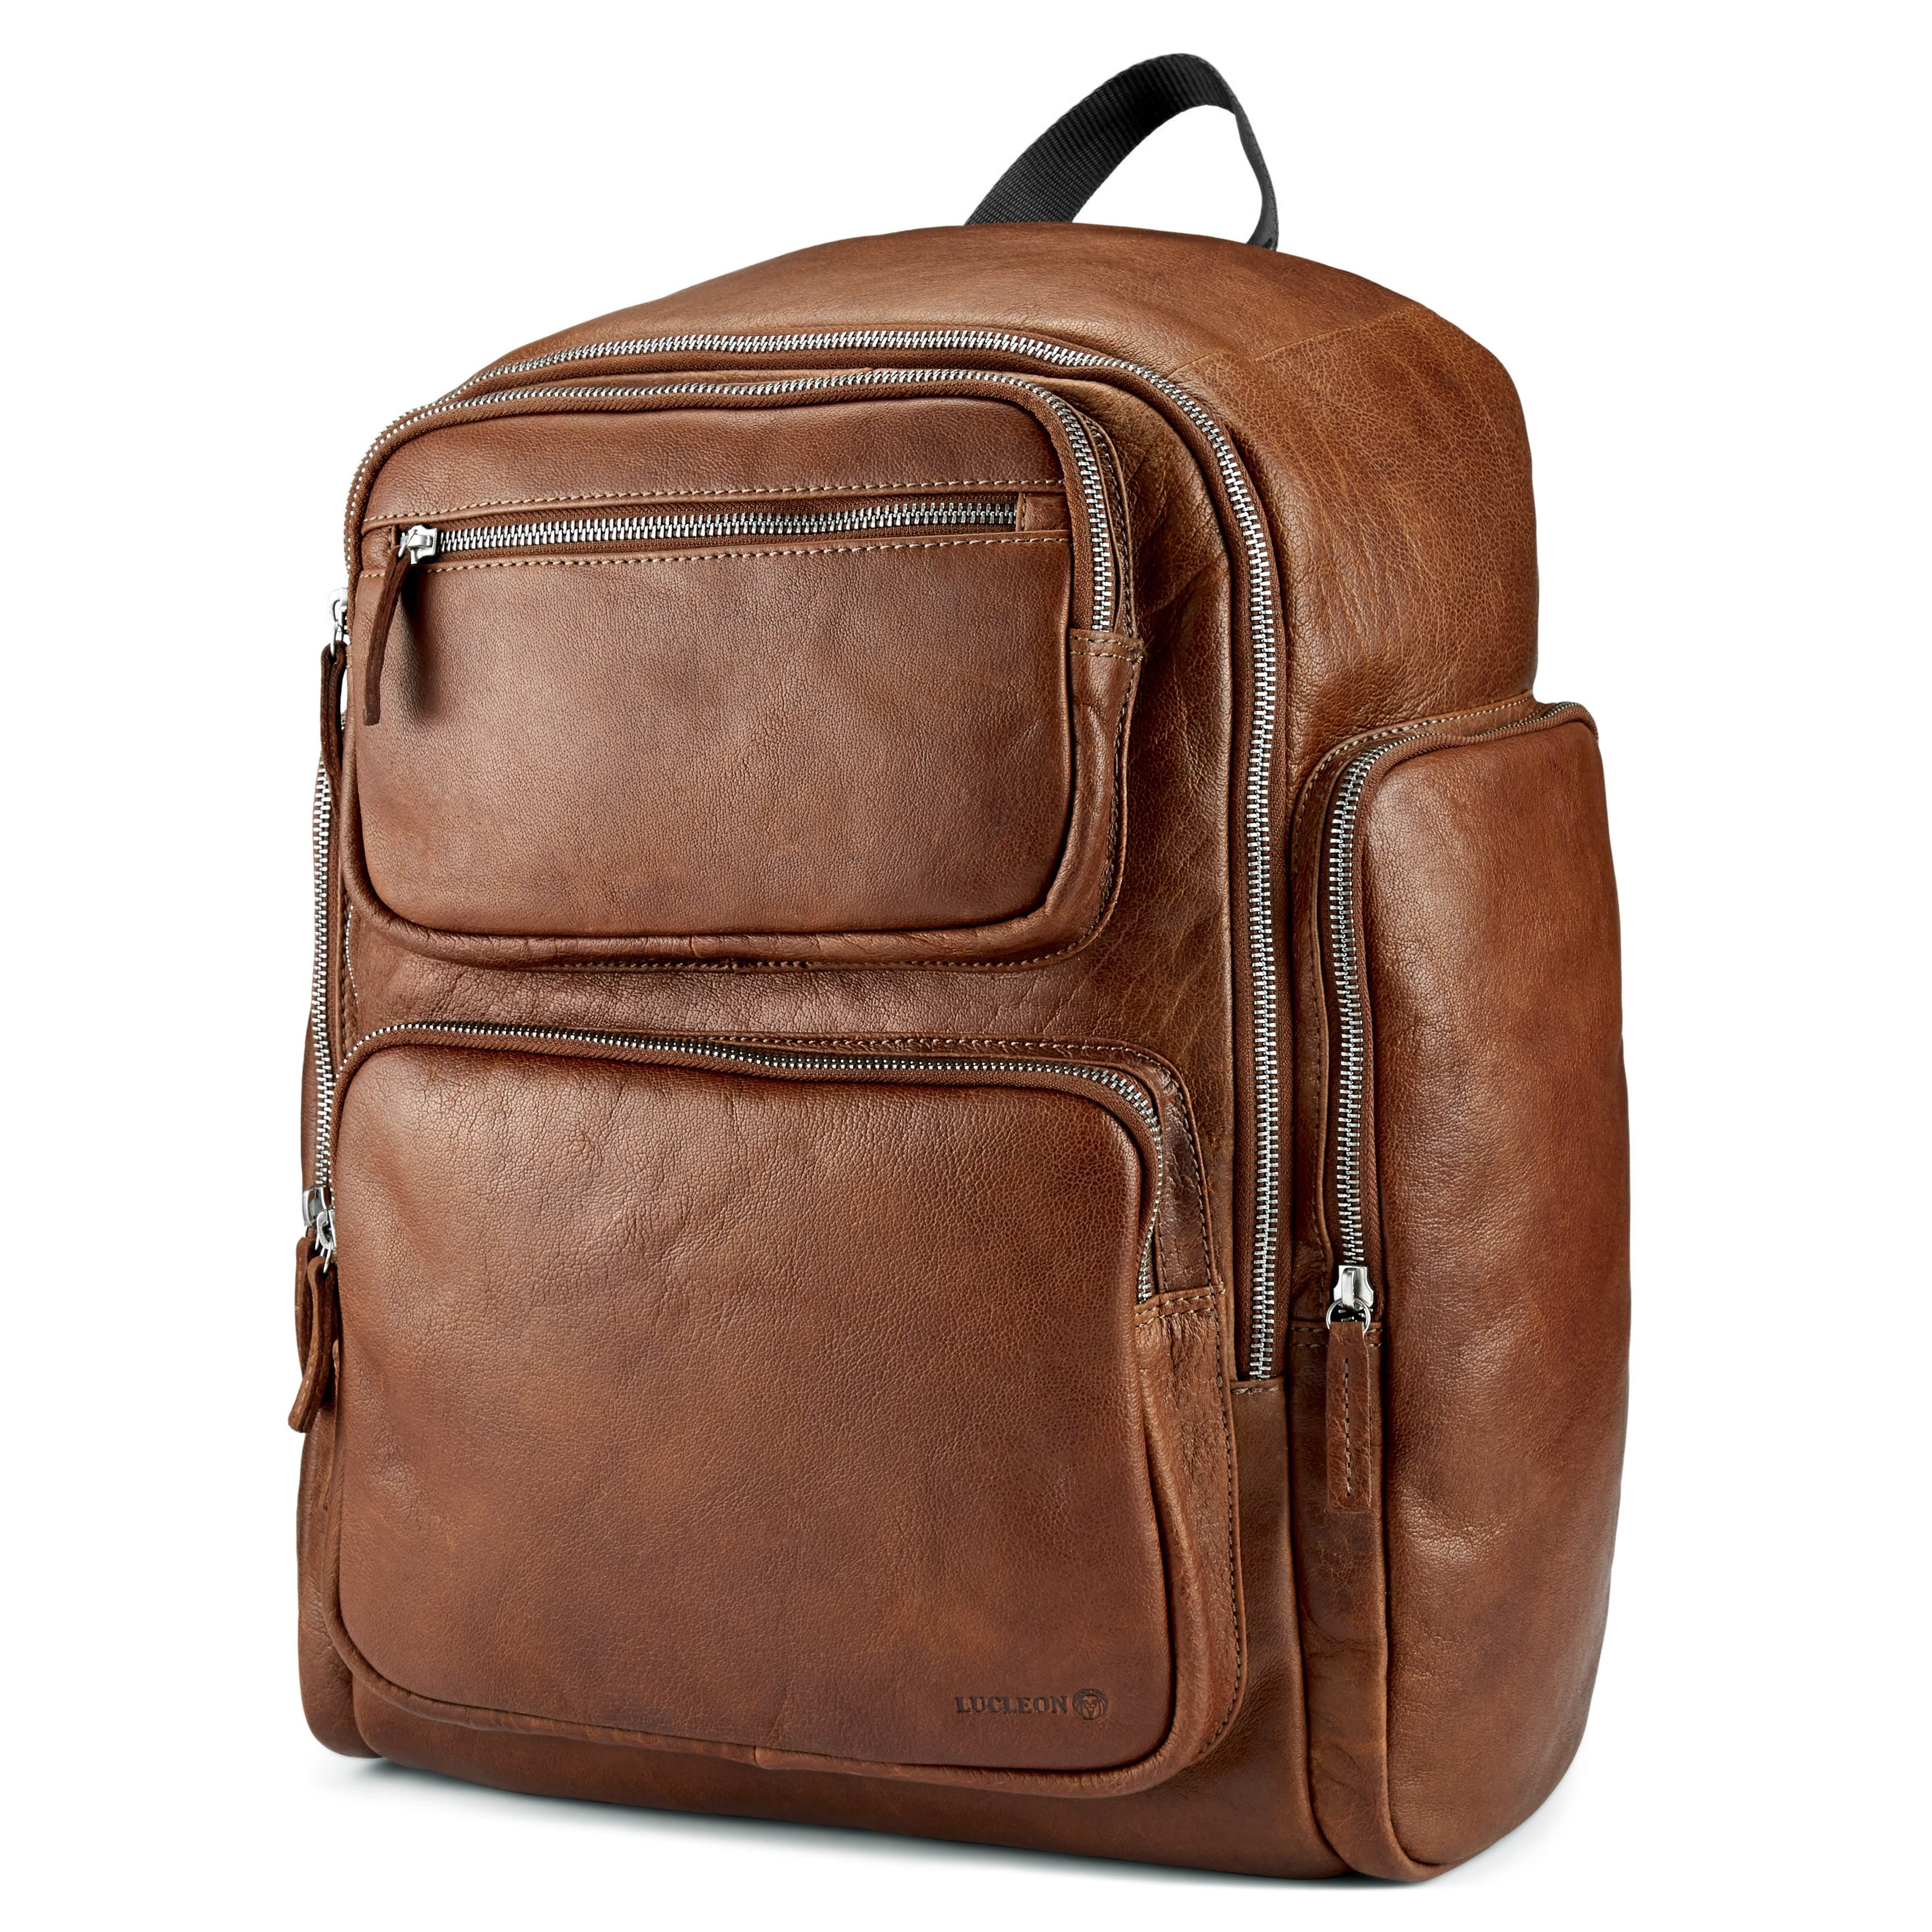 California Tan Leather Backpack